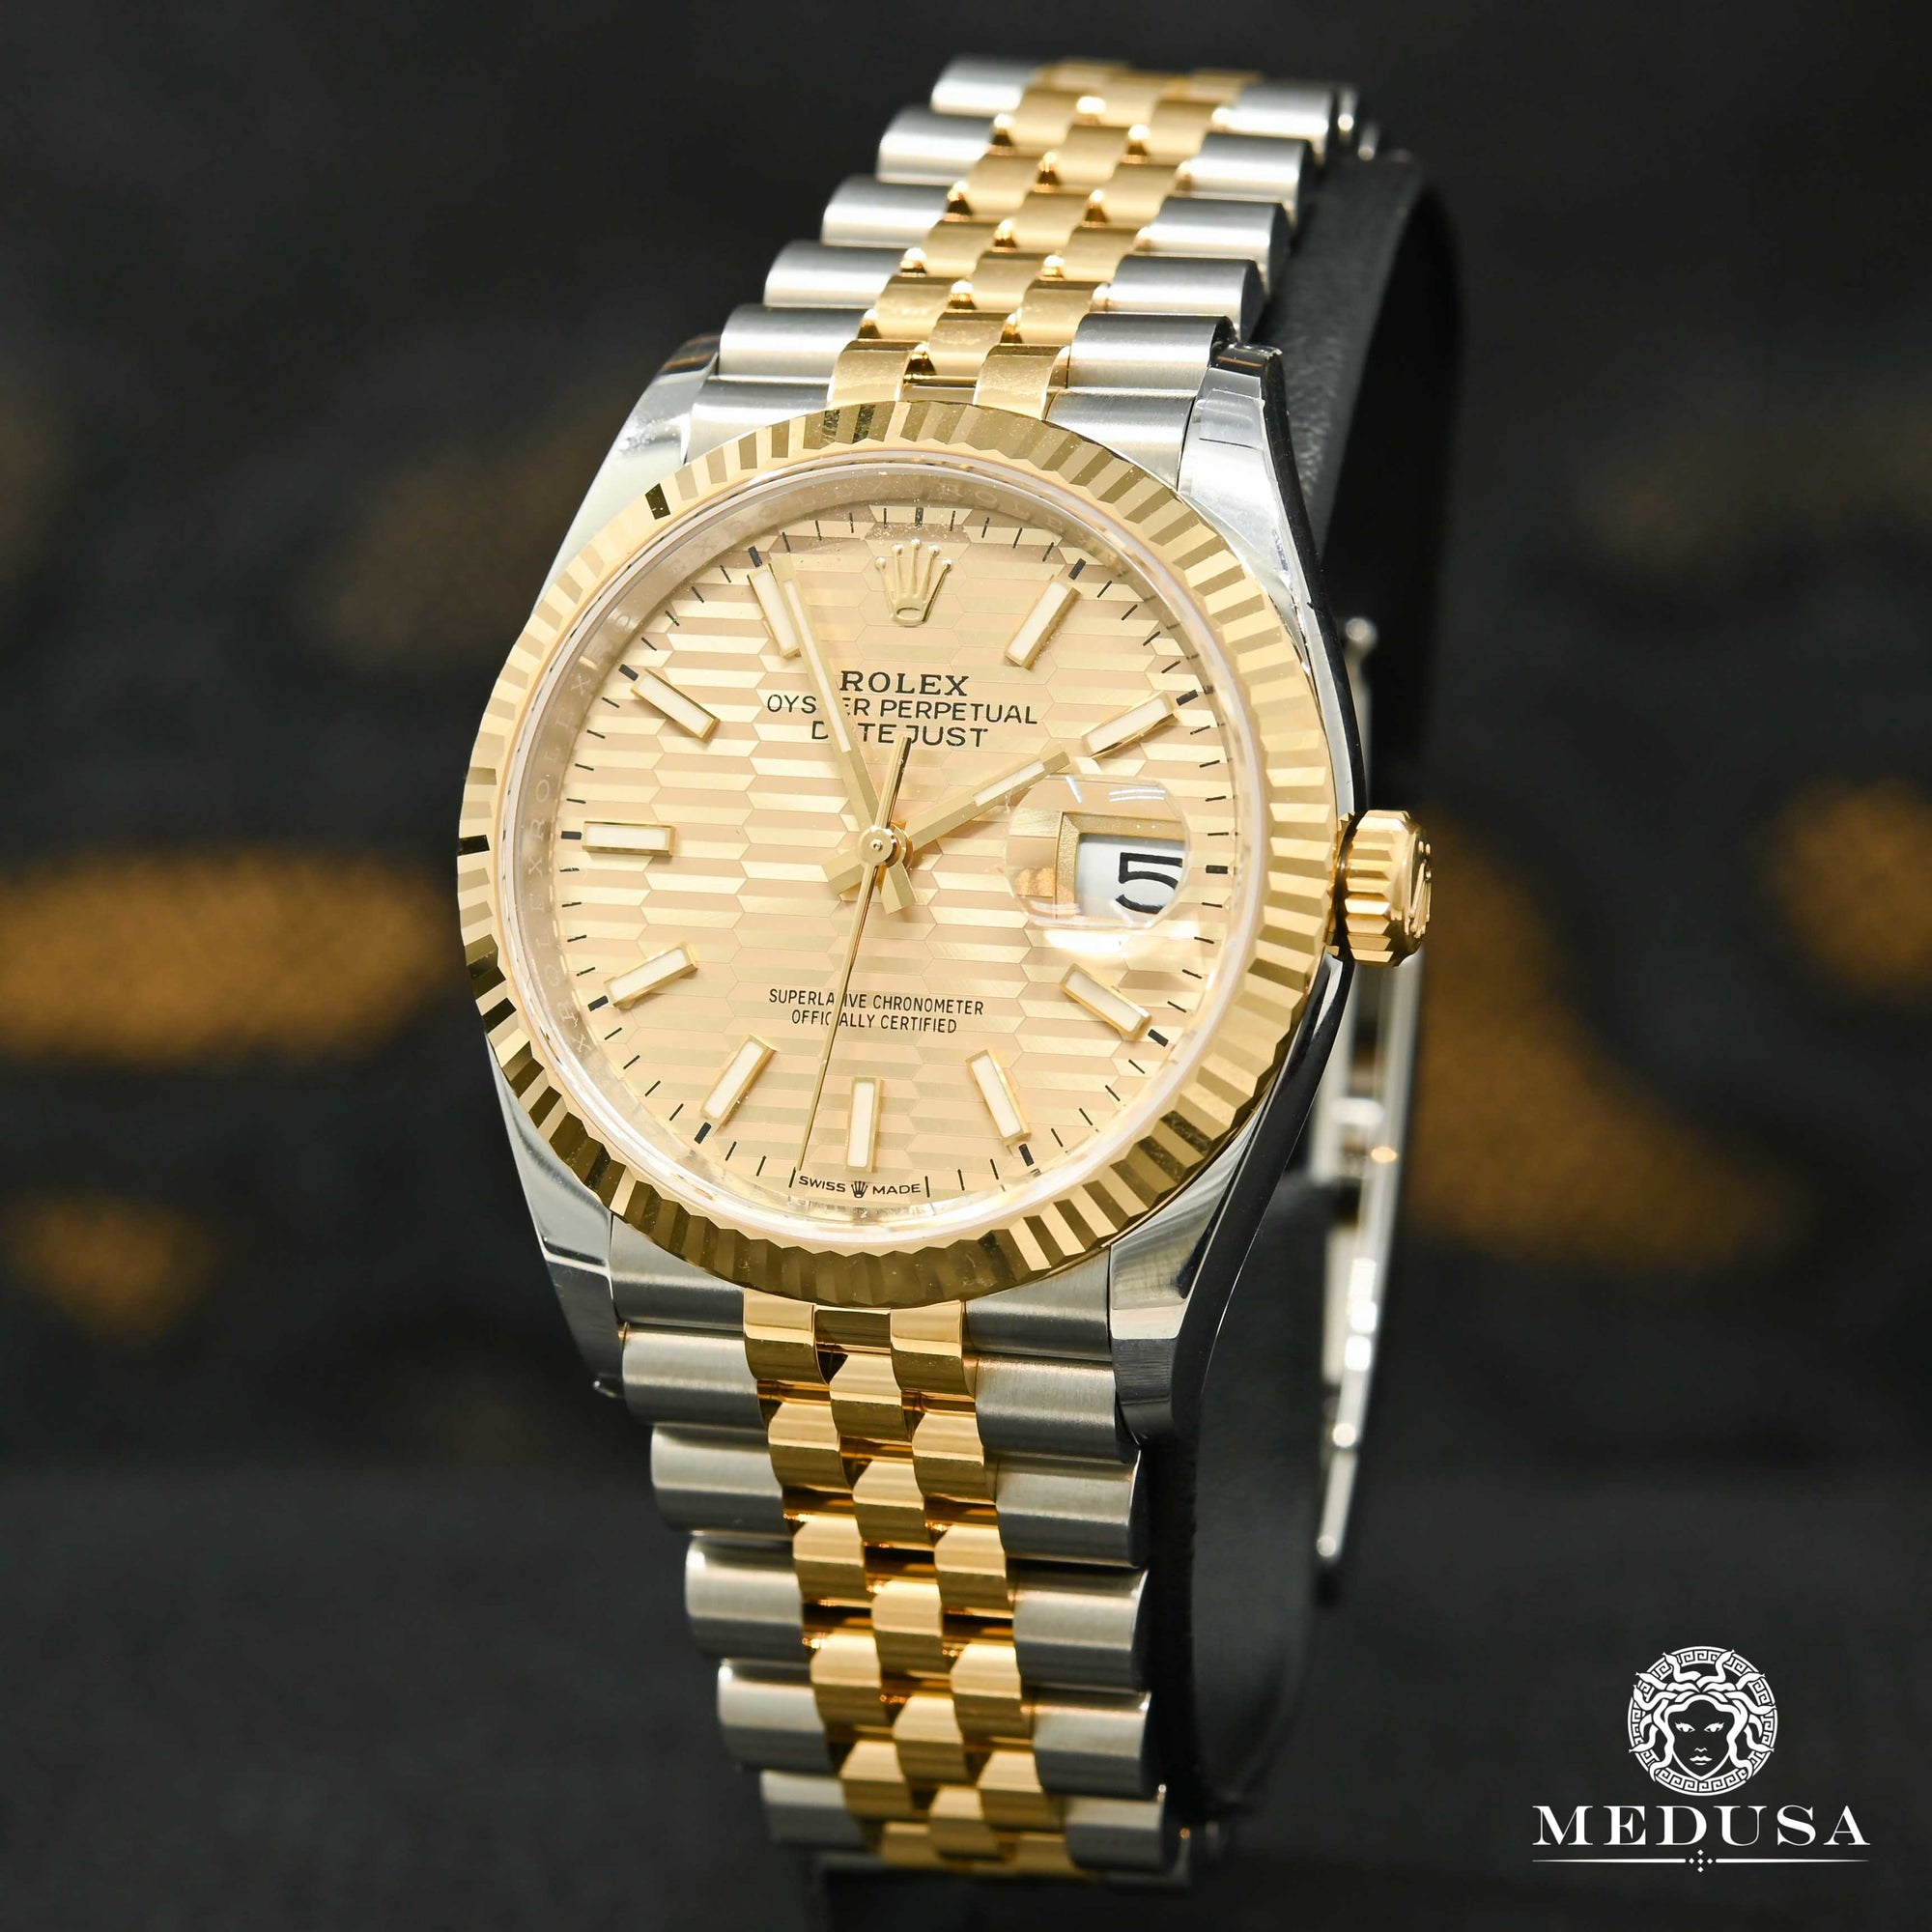 Rolex watch | Rolex Datejust Men's Watch 36mm - Jubilee Champagne 2 Tone Gold Pattern